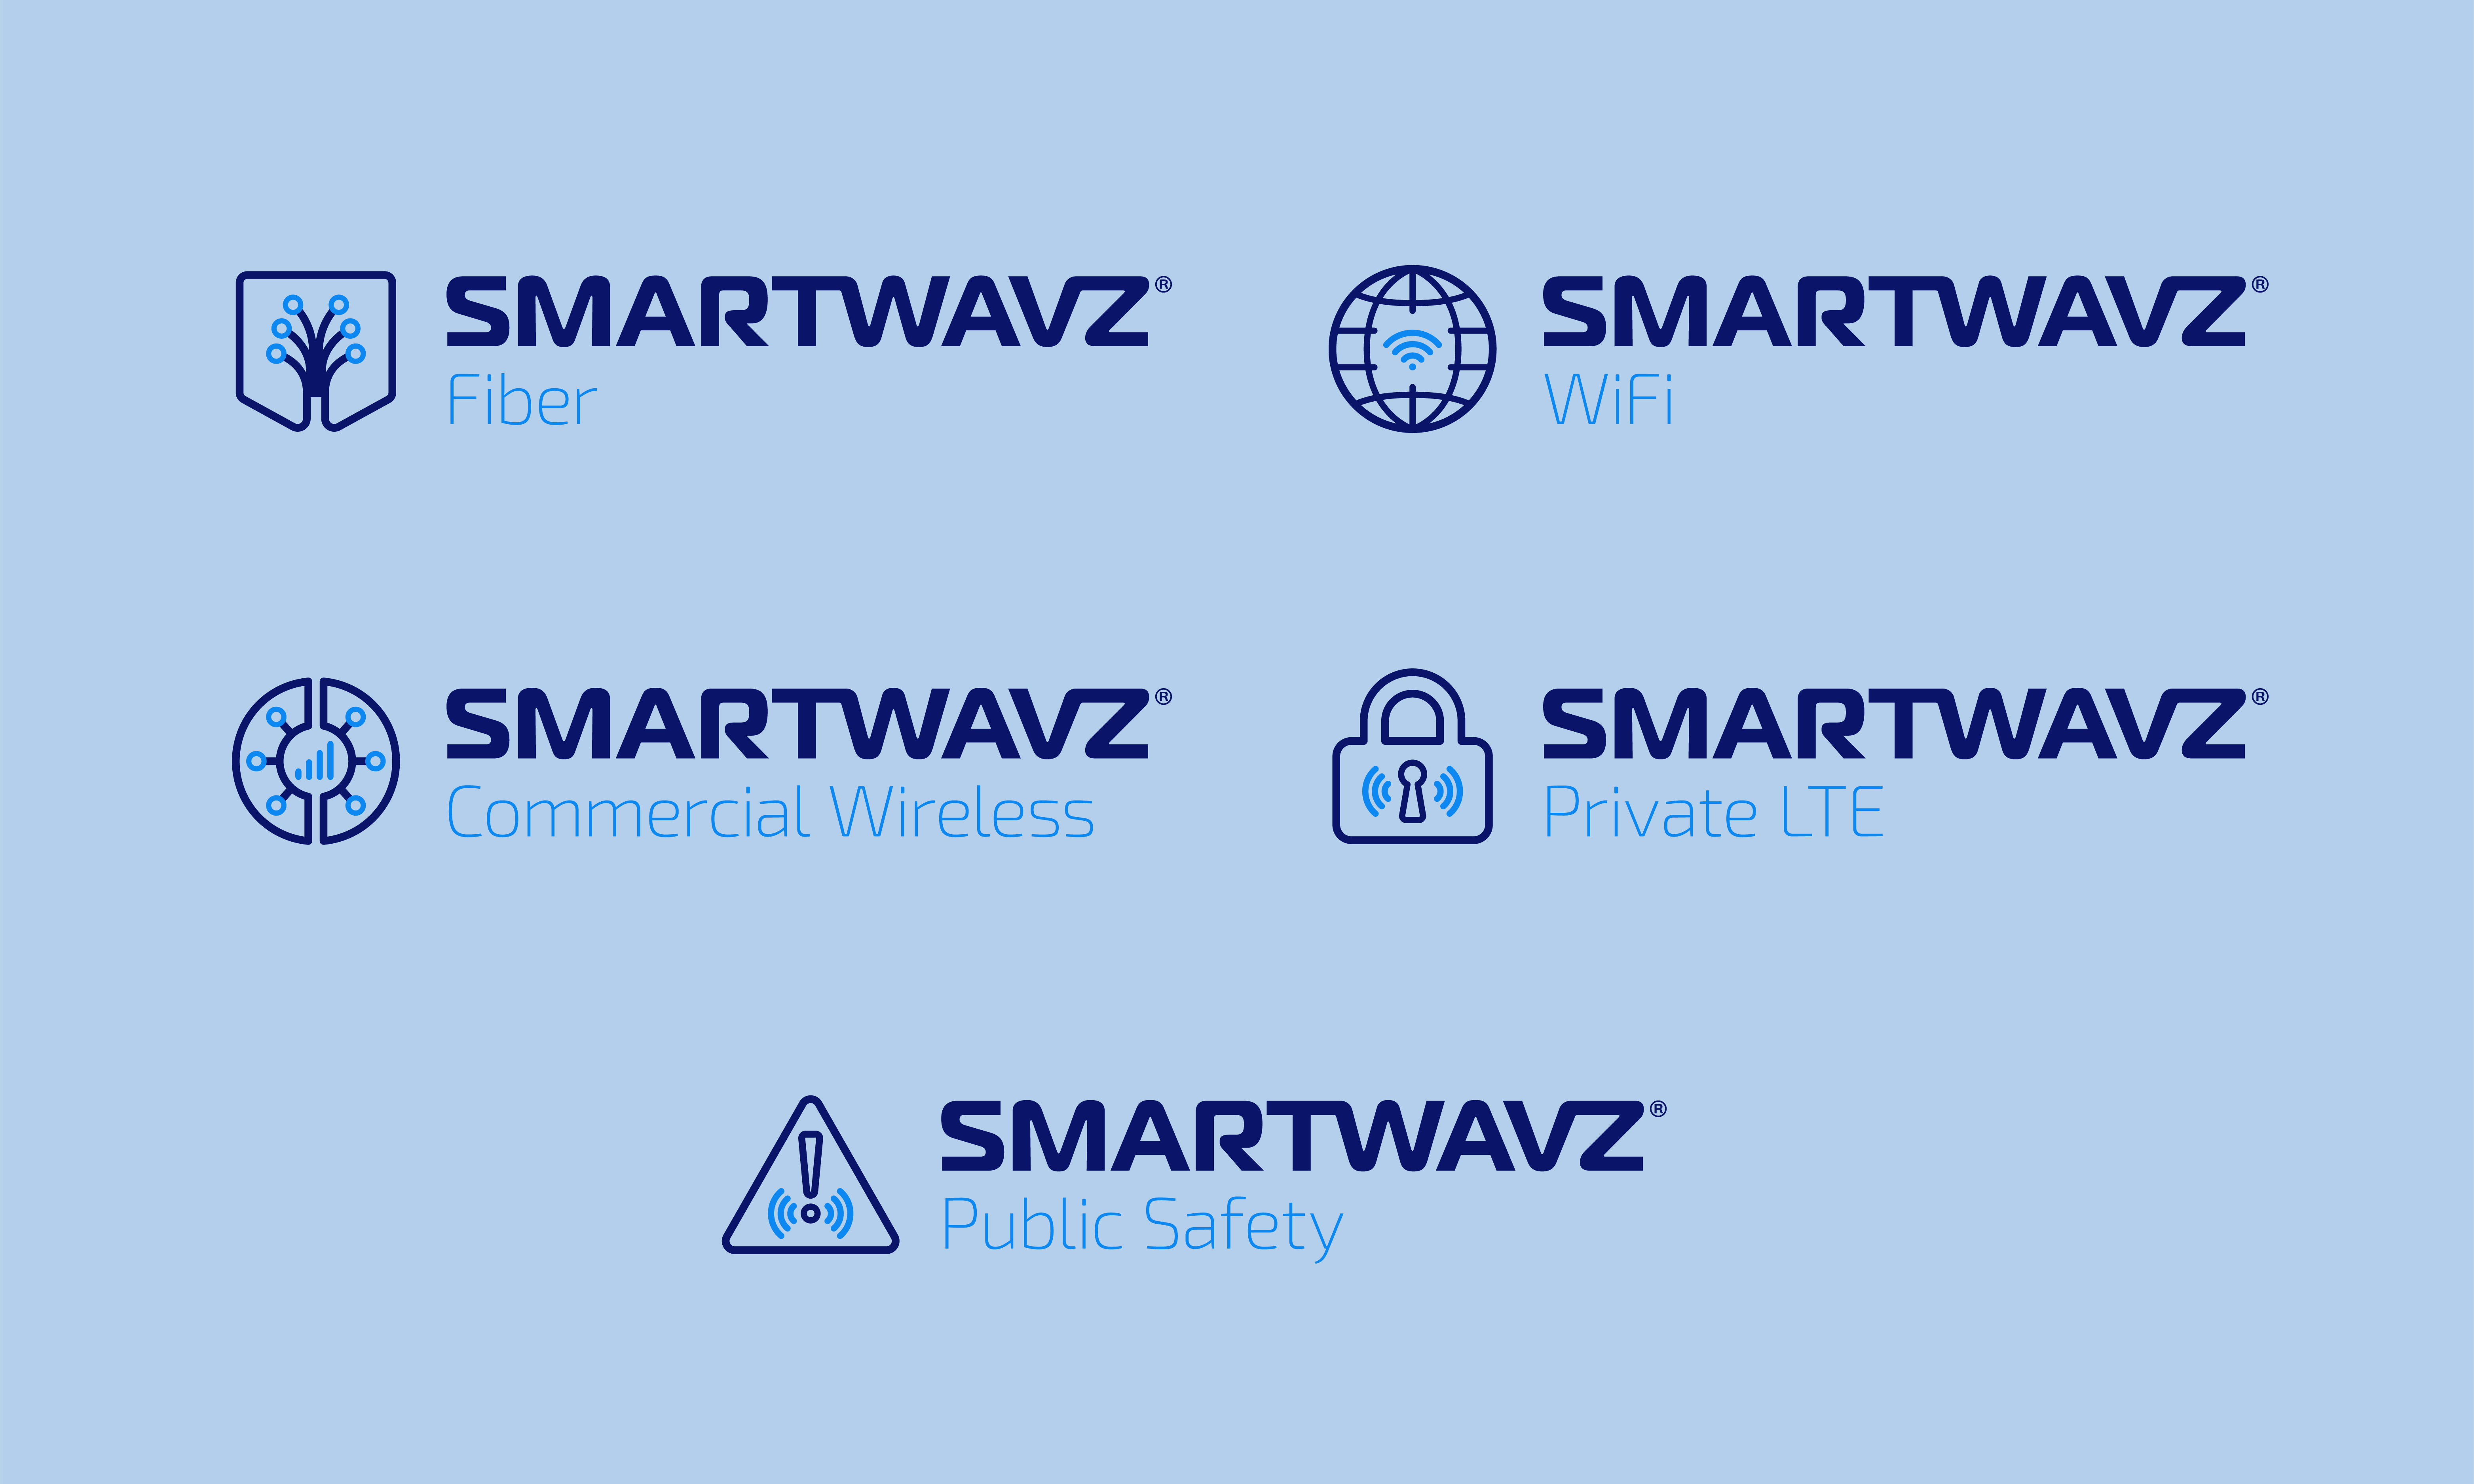 Smartwavz product line logos